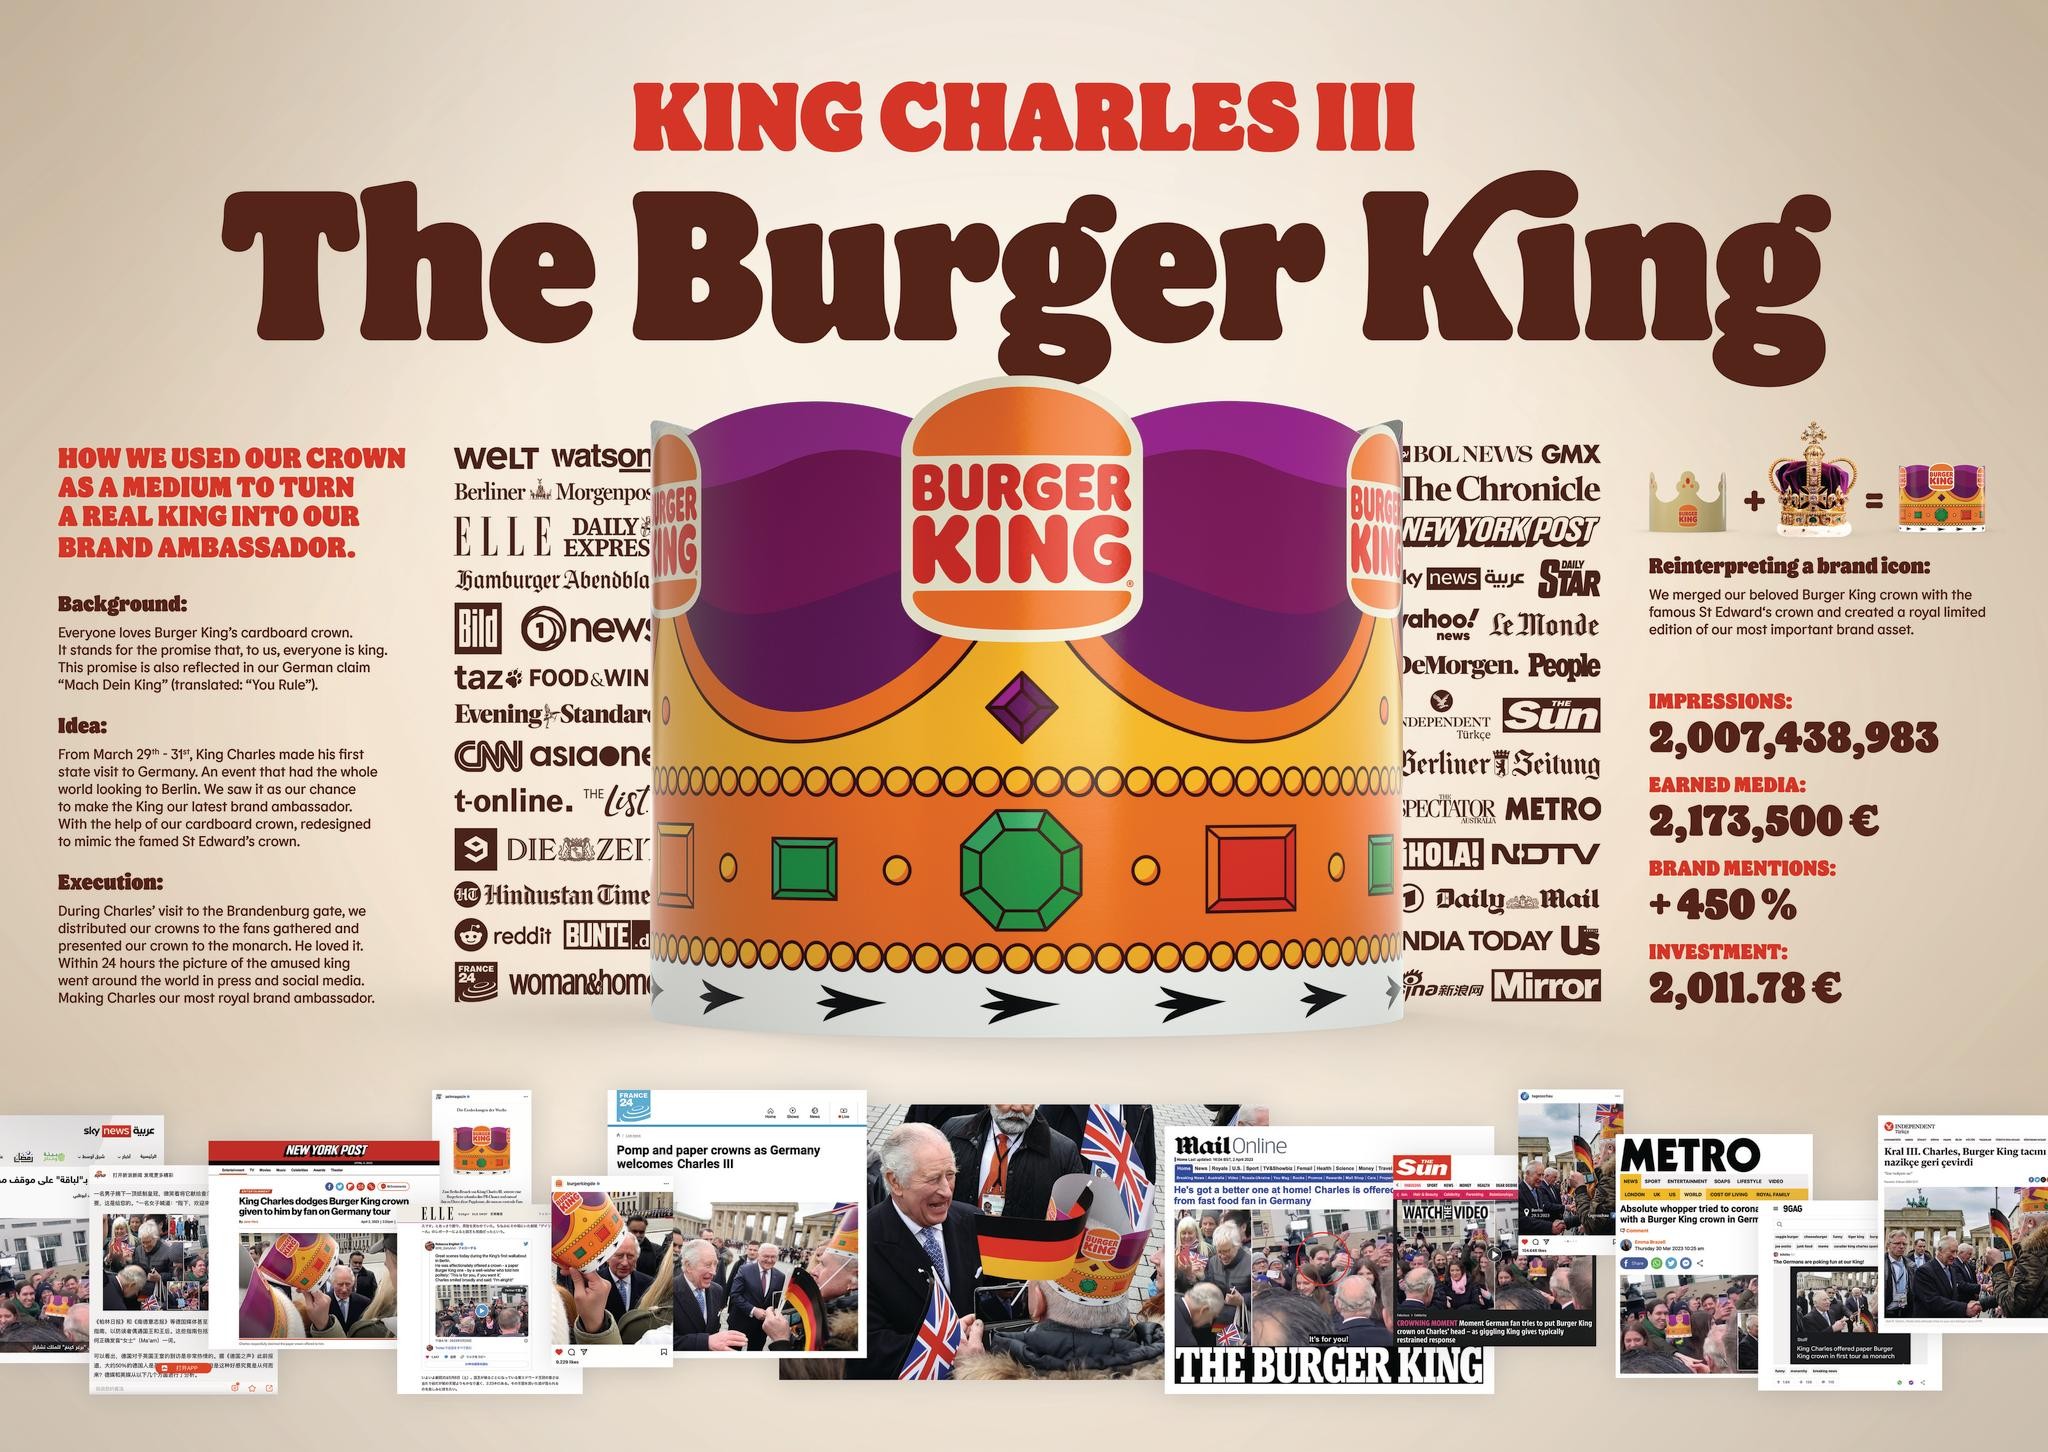 “Charles III – The Burger King”